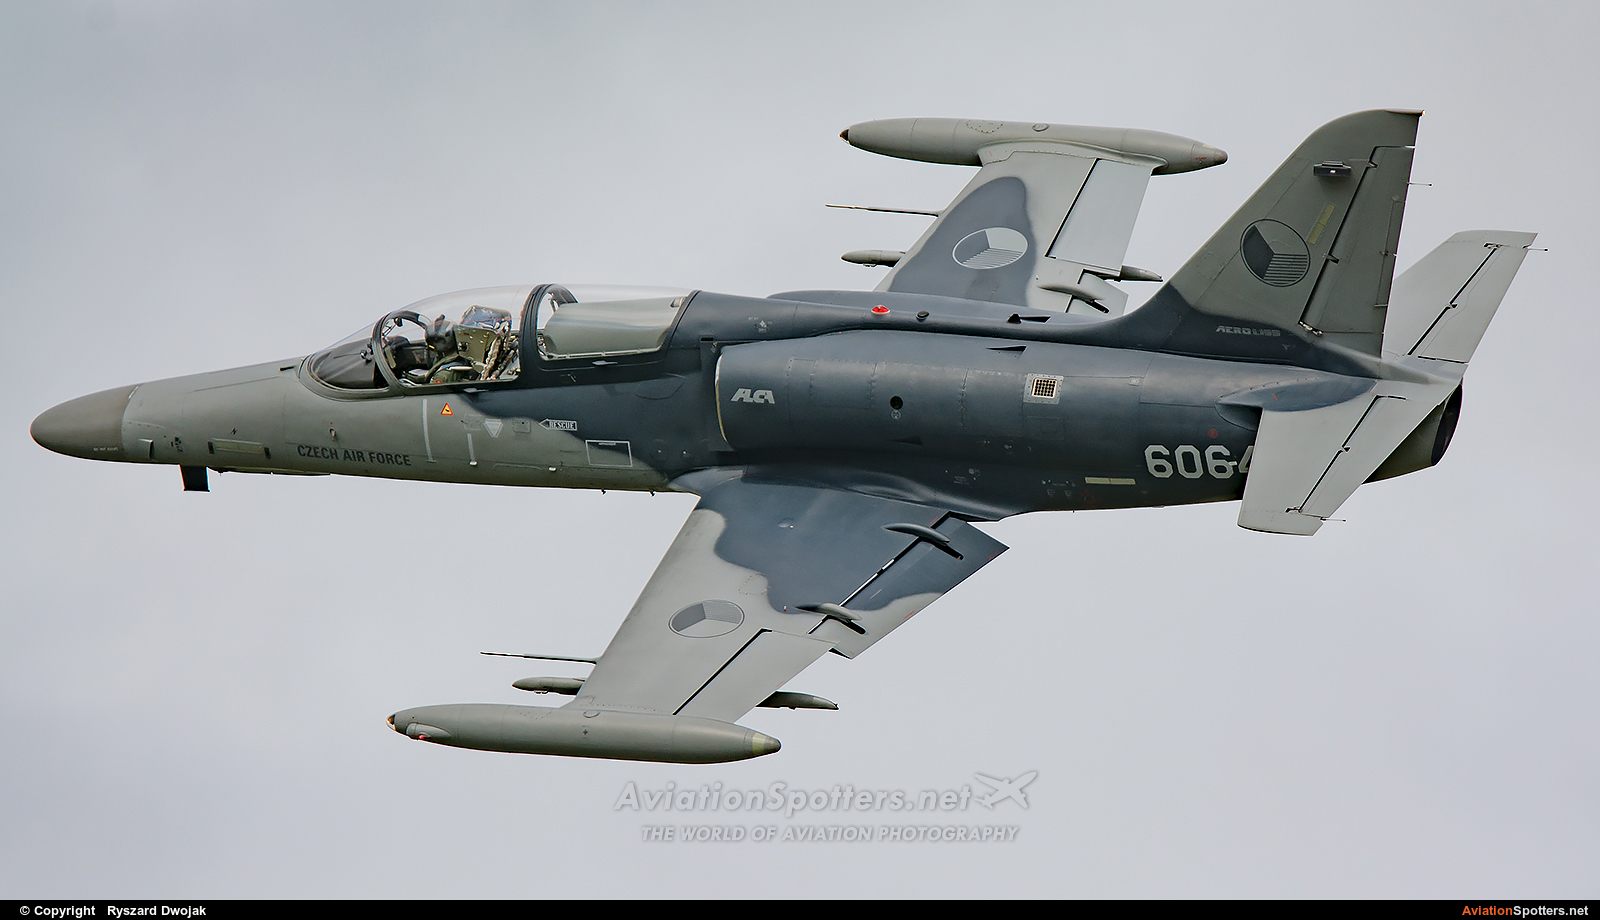 Czech - Air Force  -  L-159A Alca  (6064) By Ryszard Dwojak (ryś)